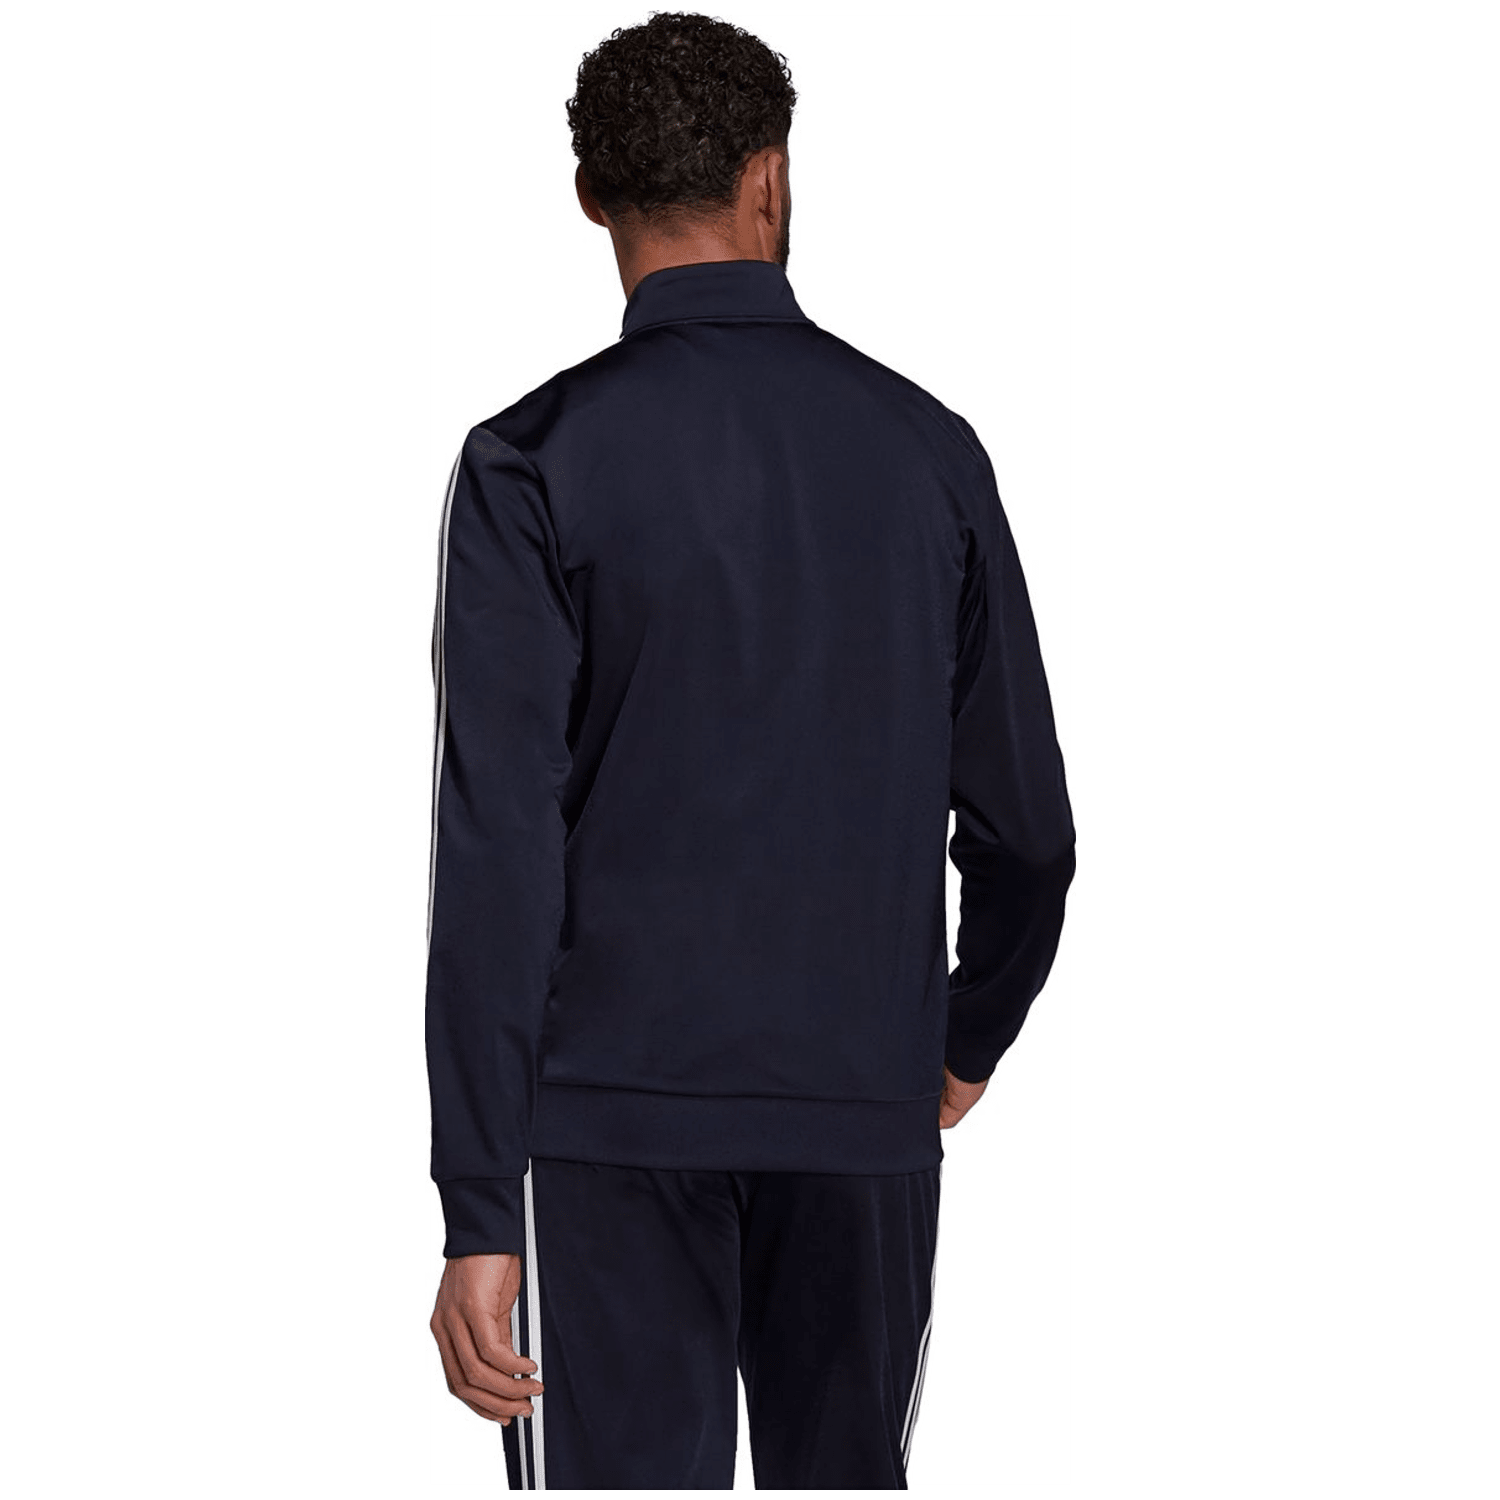 Adidas Primegreen Essentials Warm-Up 3-Streifen Trainingsjacke Herren